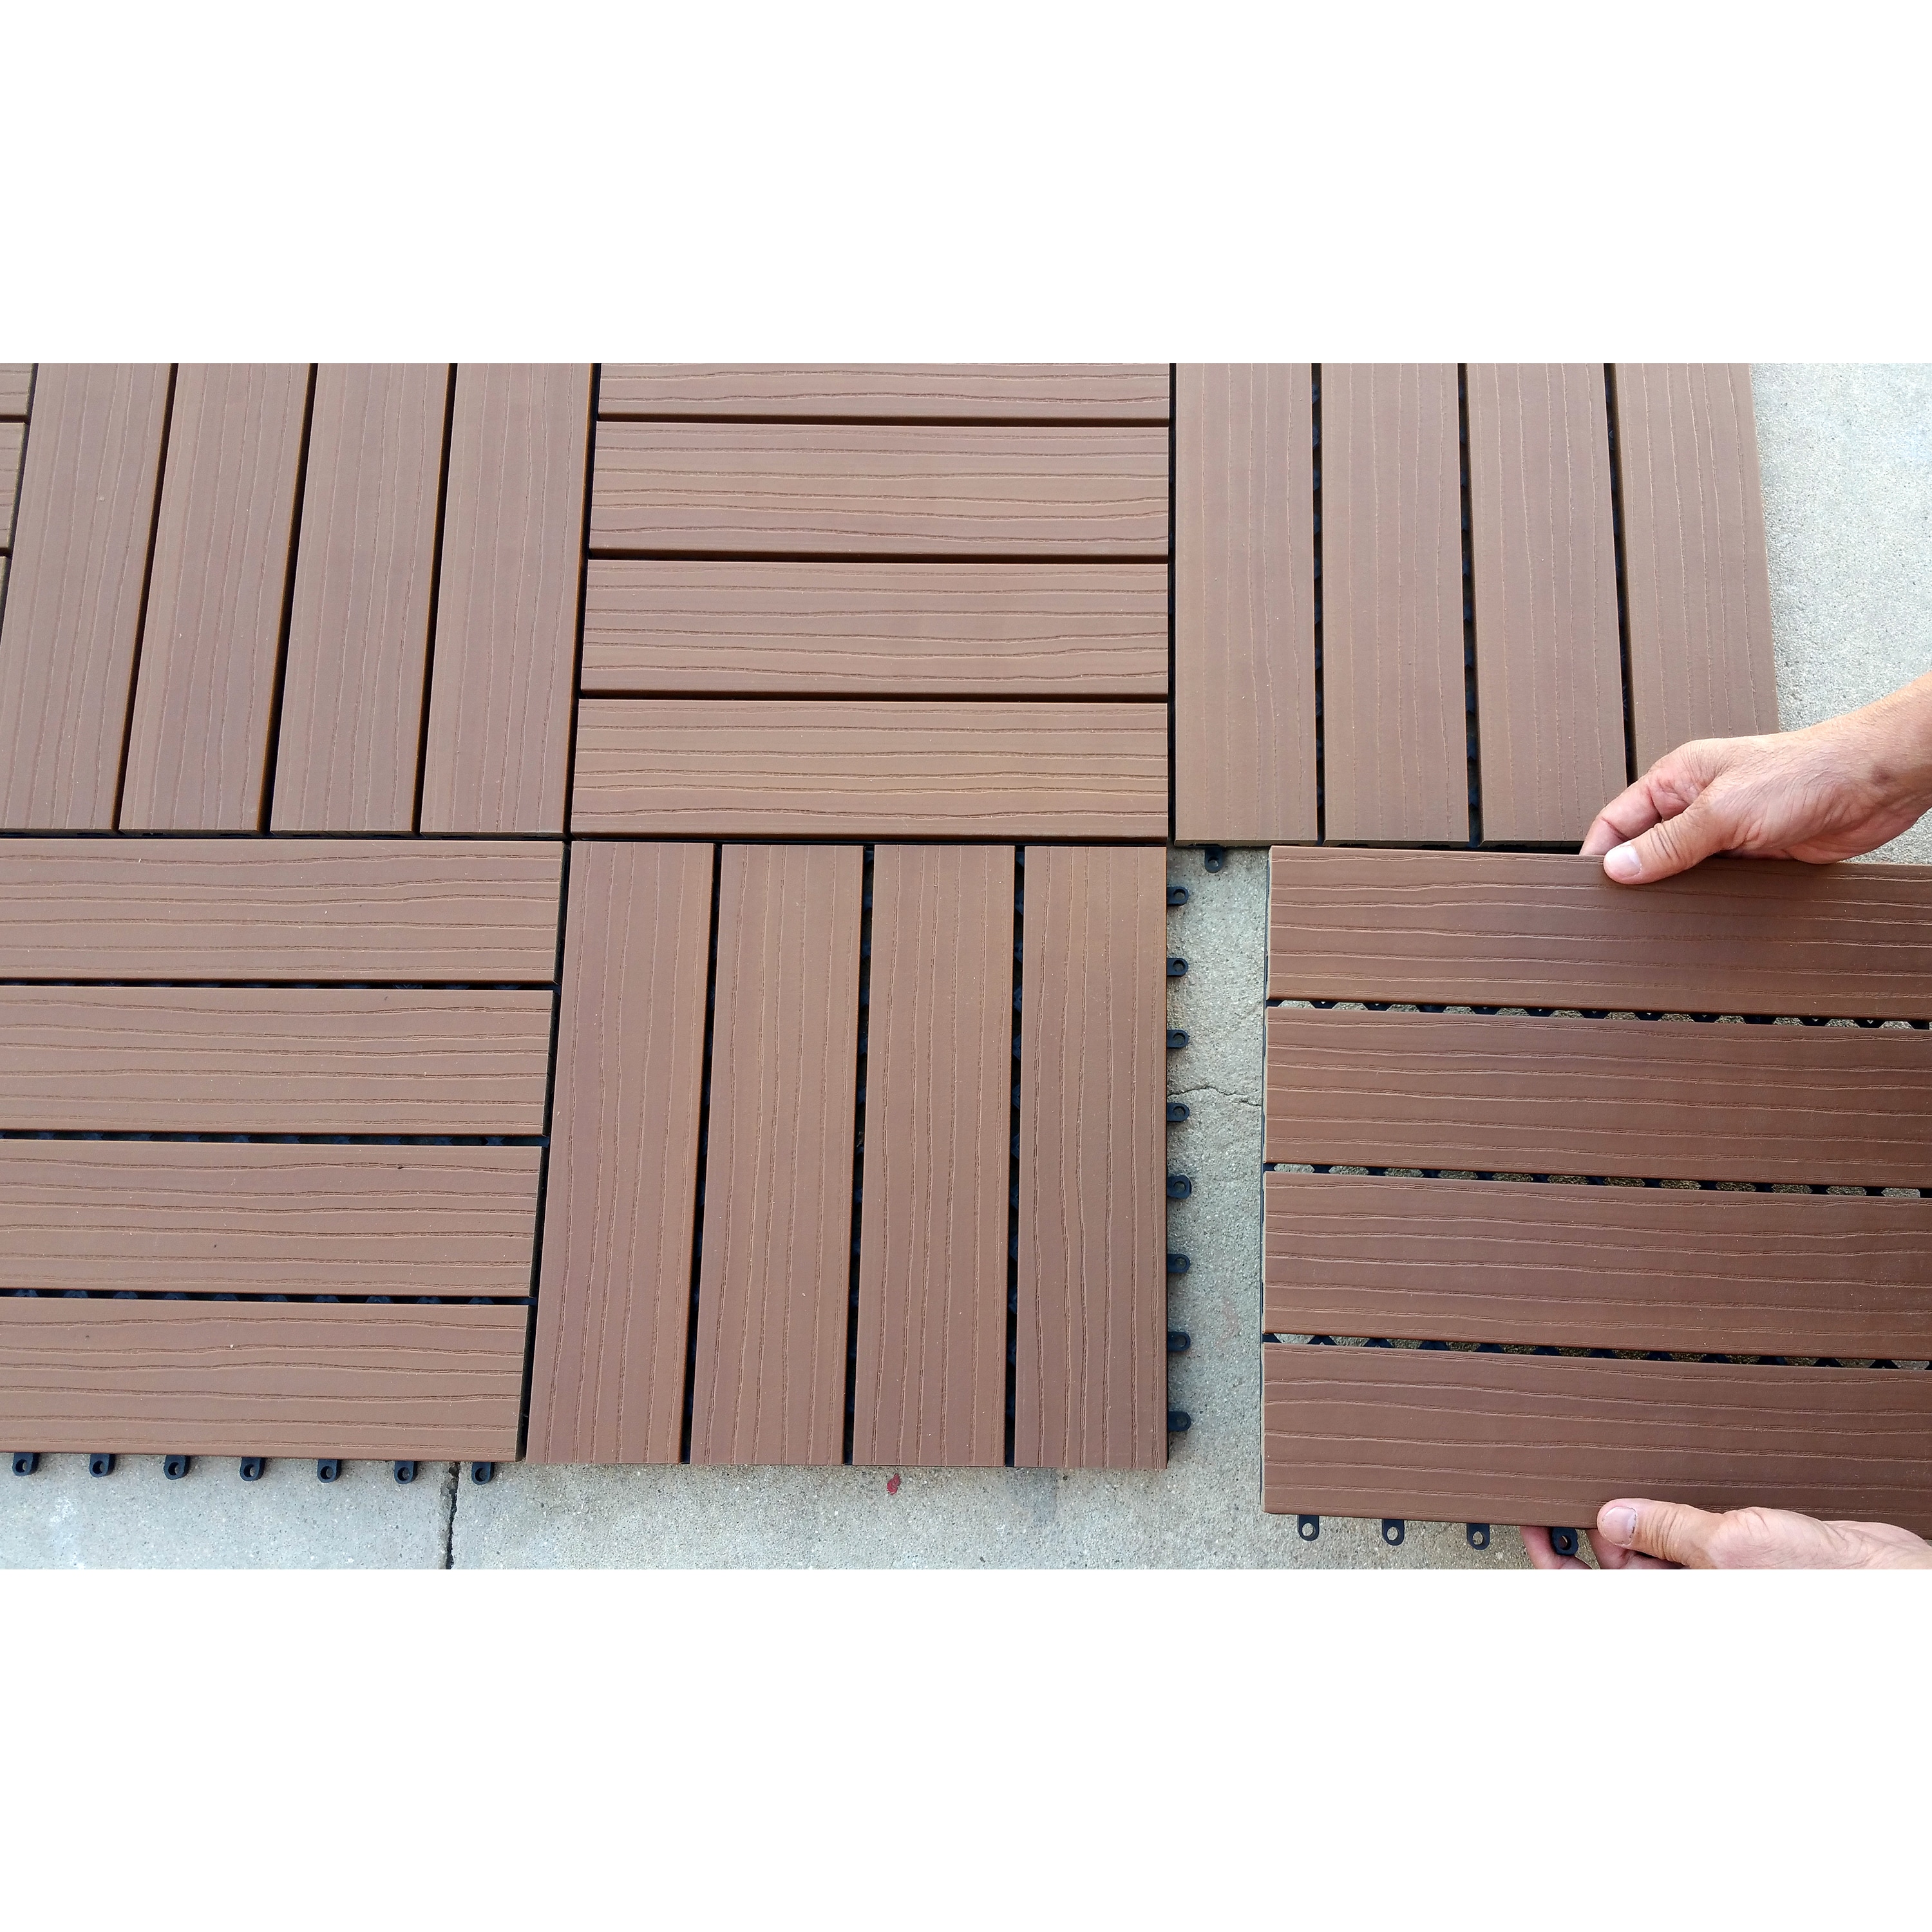 Shop Superwood Deck Tiles Composite Cedar Snap To Install No